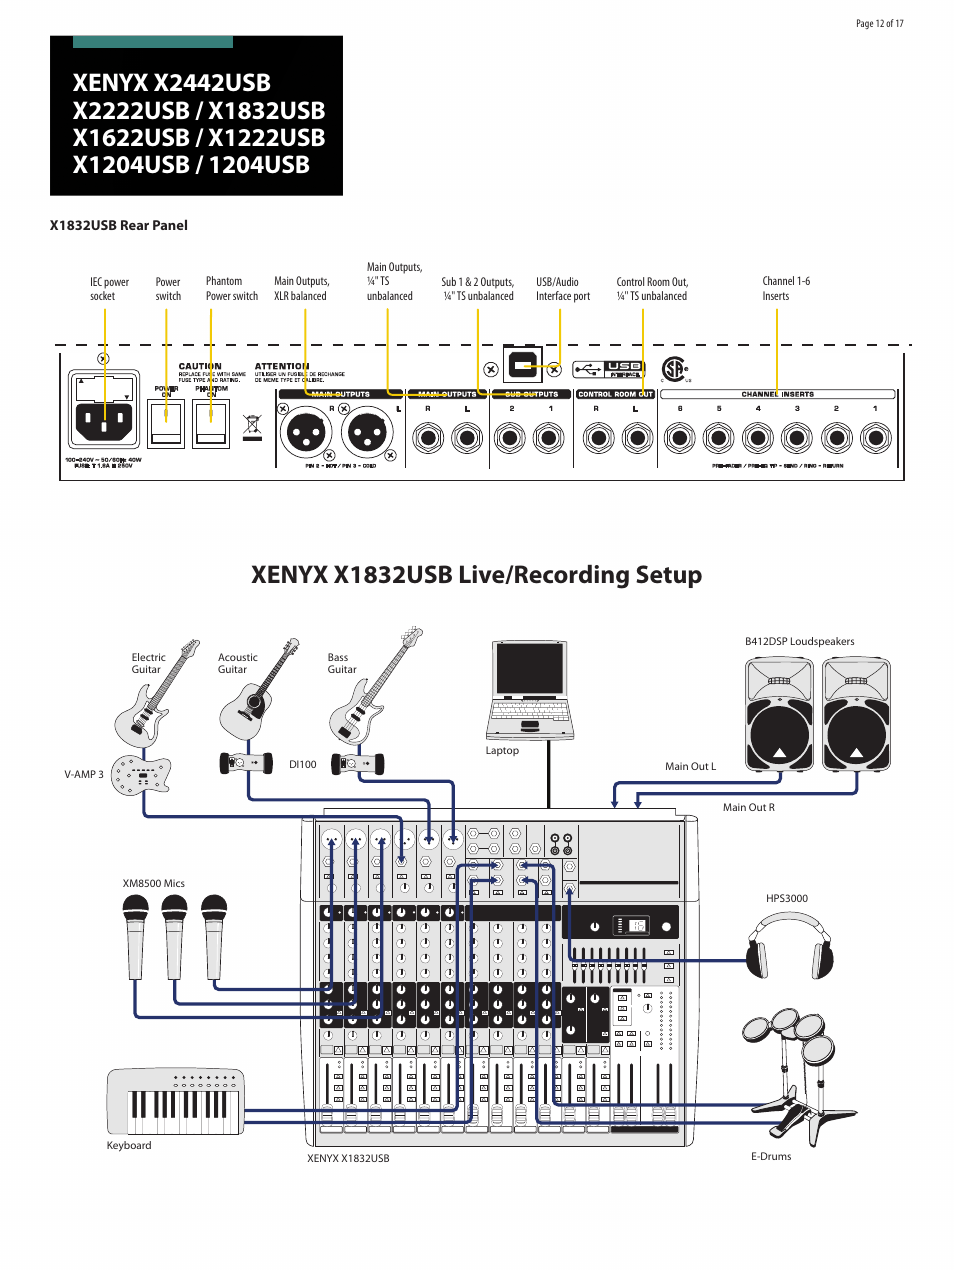 Xenyx x1832usb live/recording setup | Behringer XENYX 1204USB User Manual |  Page 12 / 17